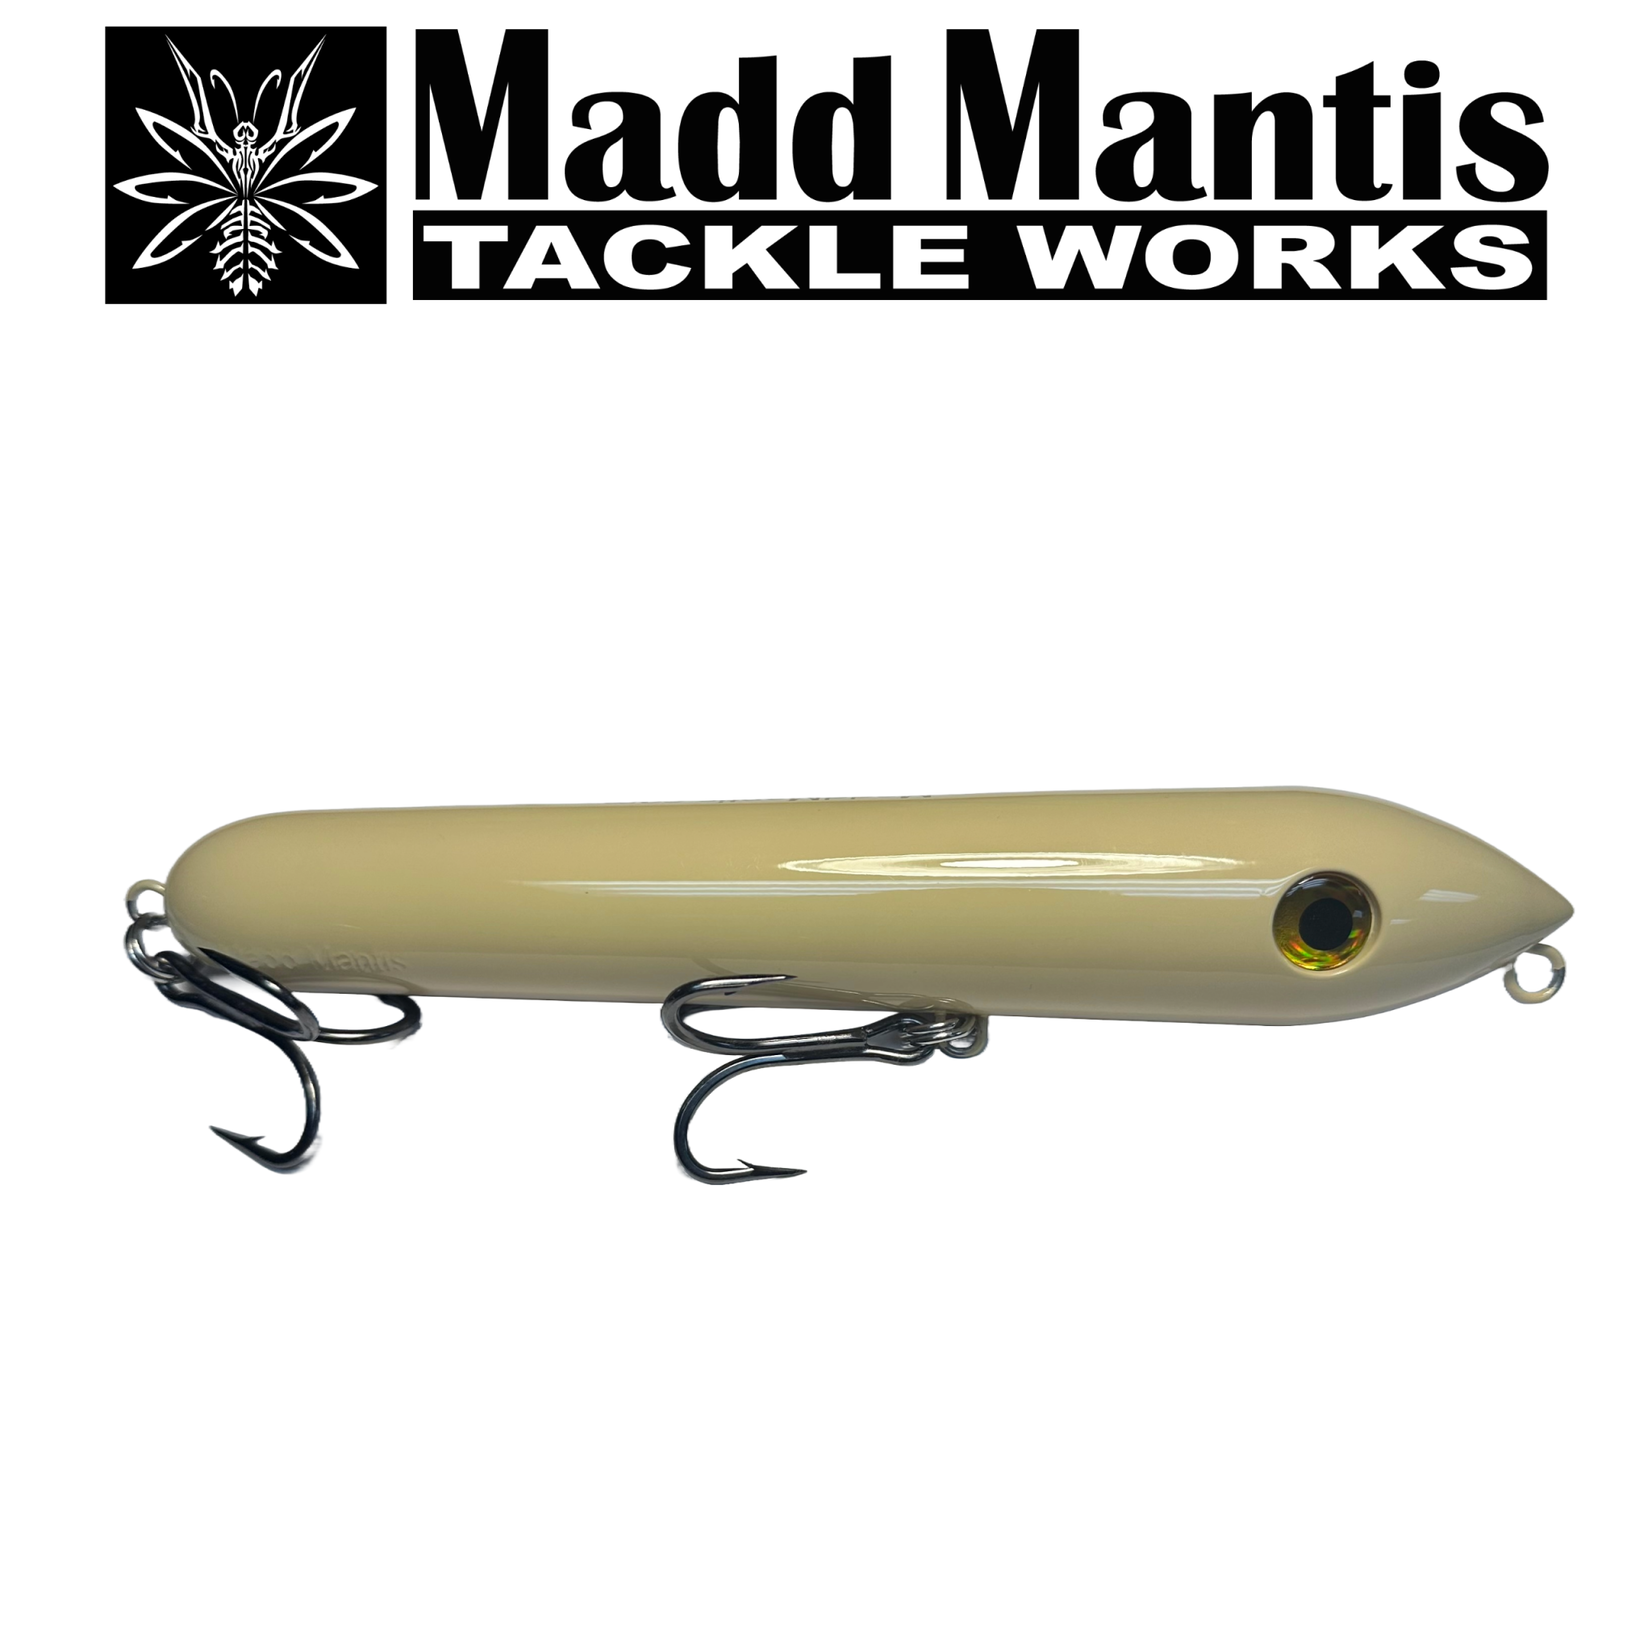 Madd Mantis Plank